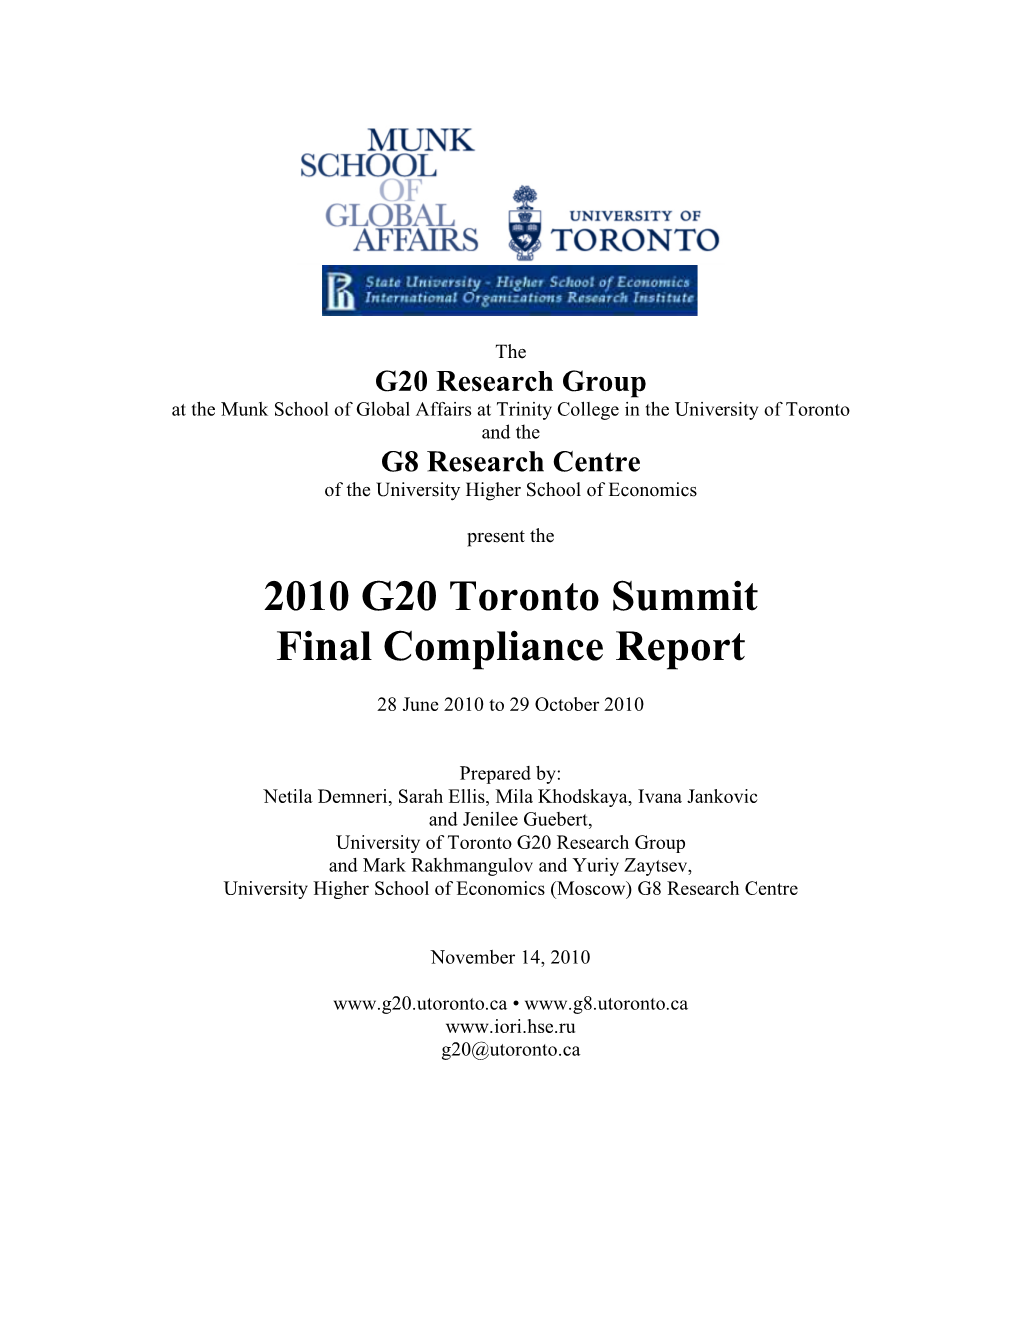 2010 G20 Toronto Summit Final Compliance Report